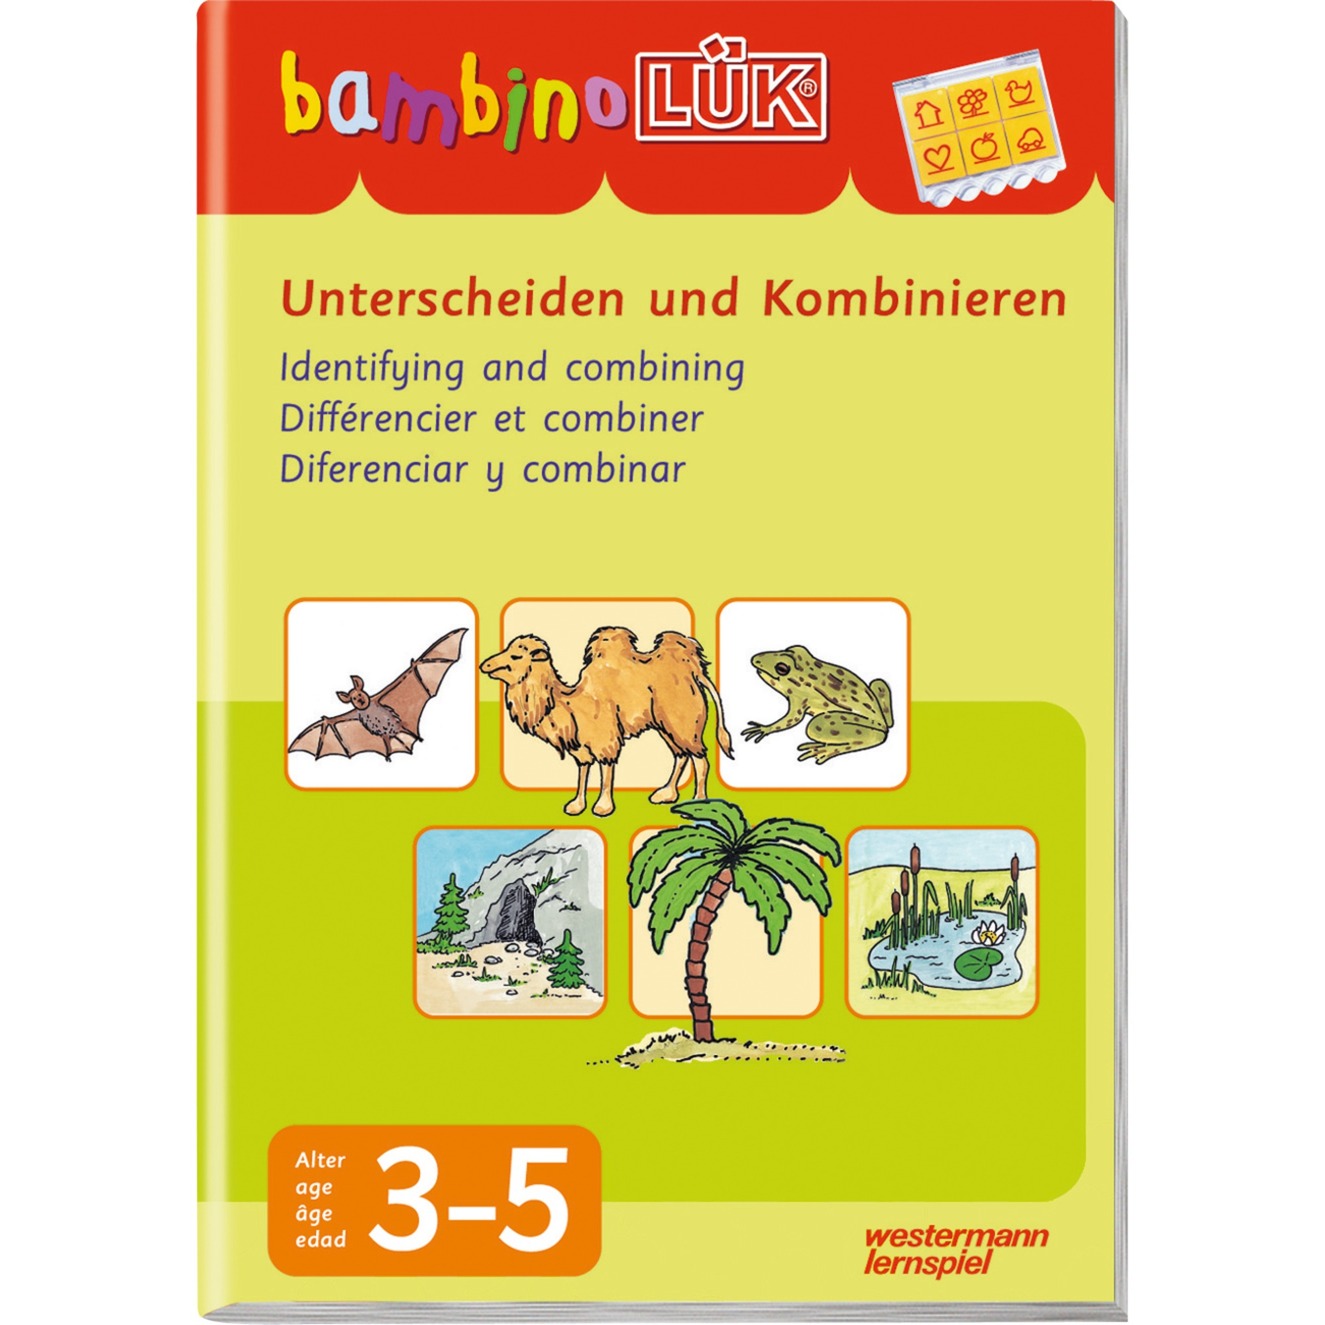 Unterscheiden und Kombinieren książka dla dzieci, Książki edukacyjne